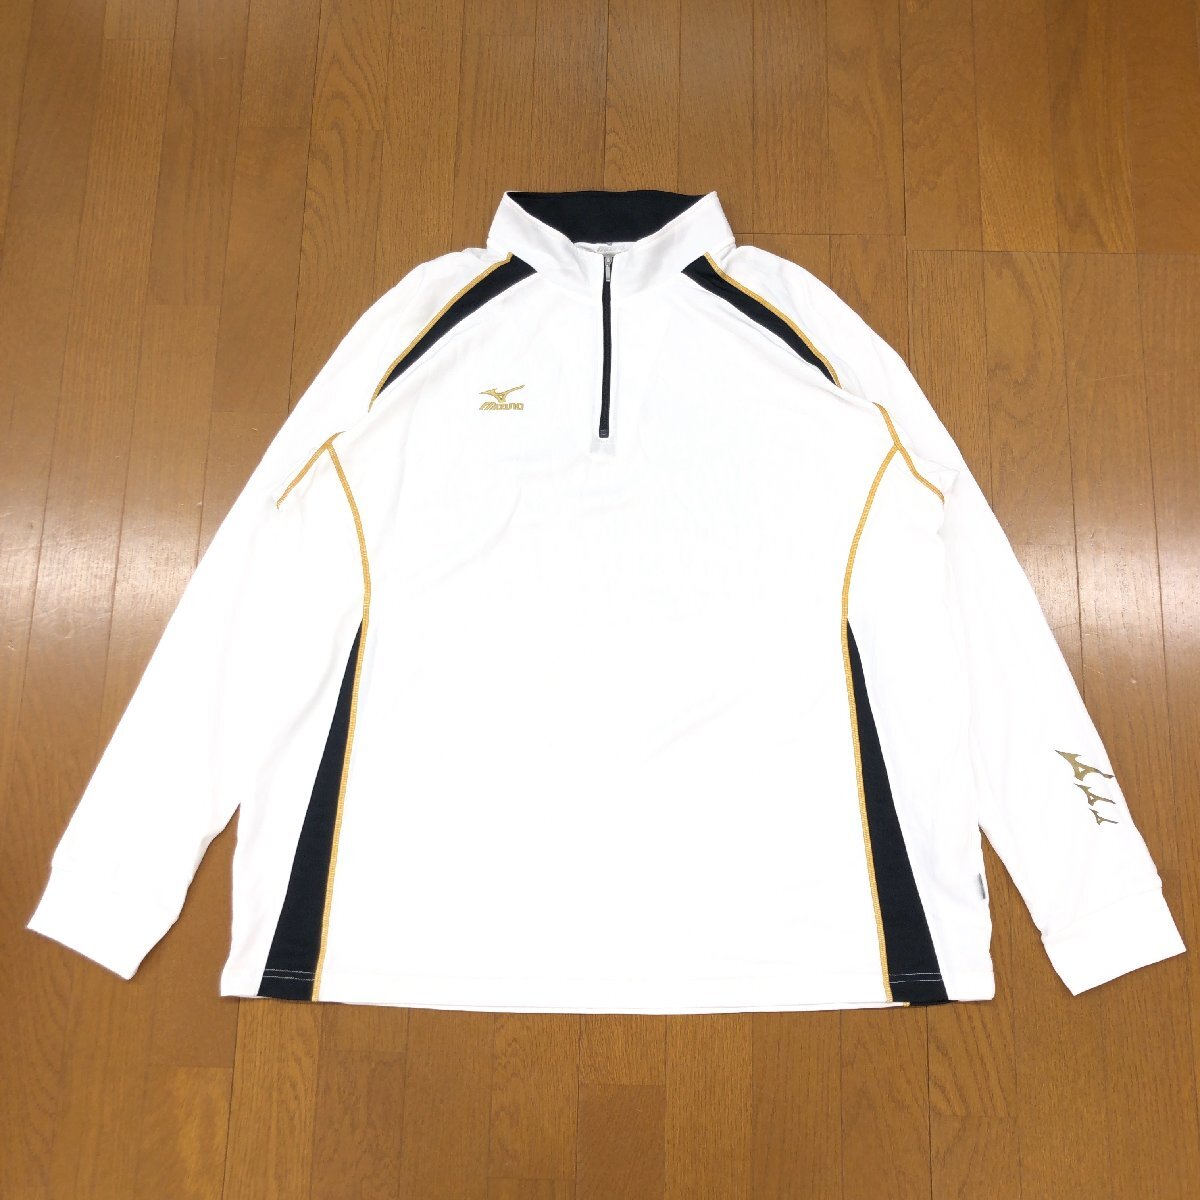 Mizuno ミズノ ロゴプリント 吸水速乾 ドライ ジャージ ハーフジップ シャツ 4L 白 ホワイト 長袖 3XL 特大 大きいサイズ メンズ 紳士の画像1